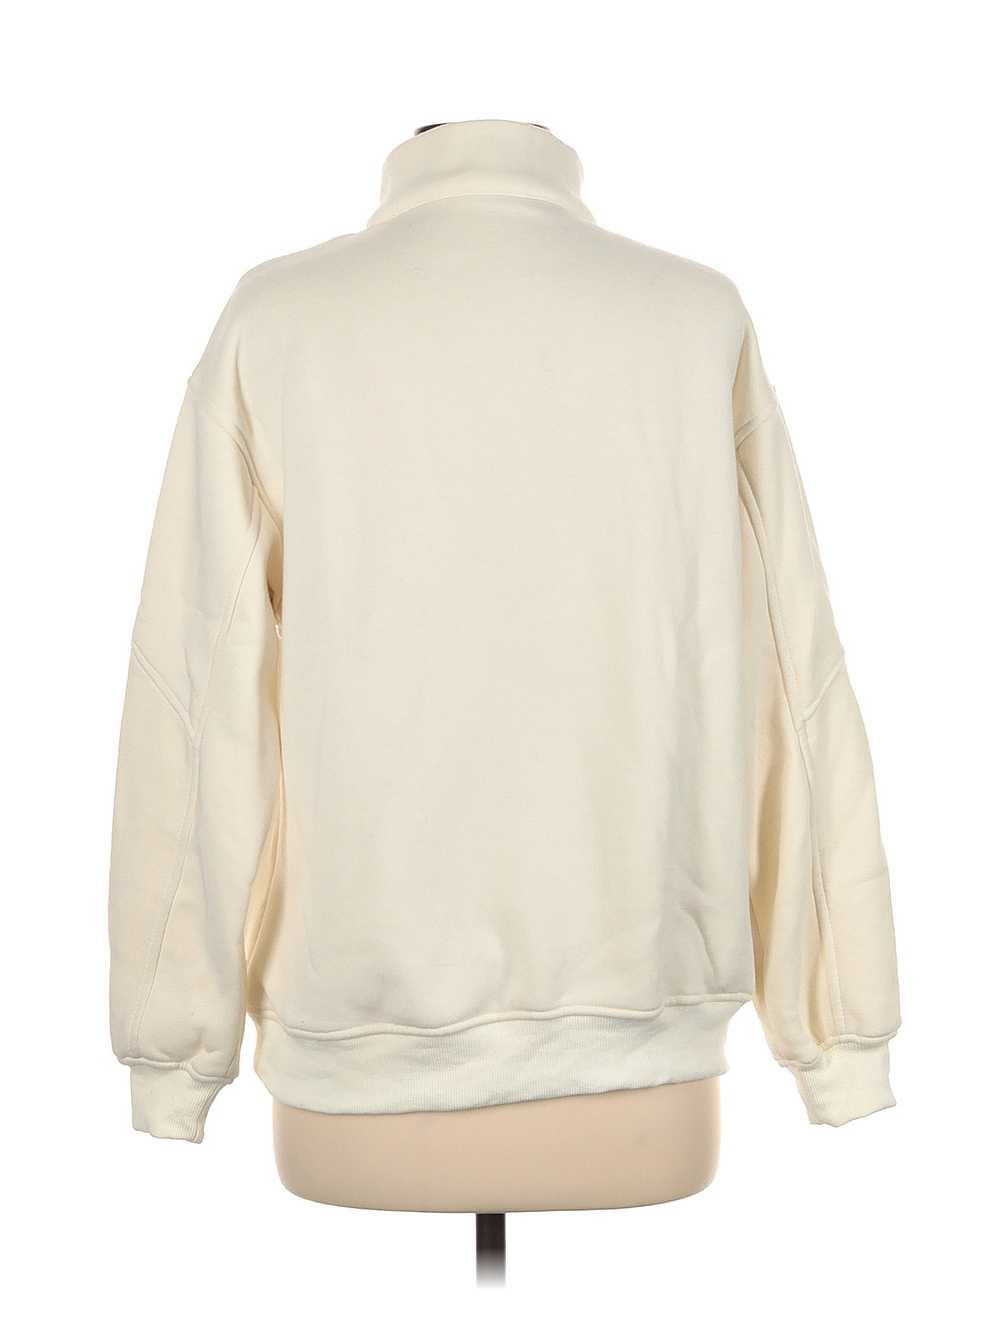 Assorted Brands Women Ivory Sweatshirt M - image 2